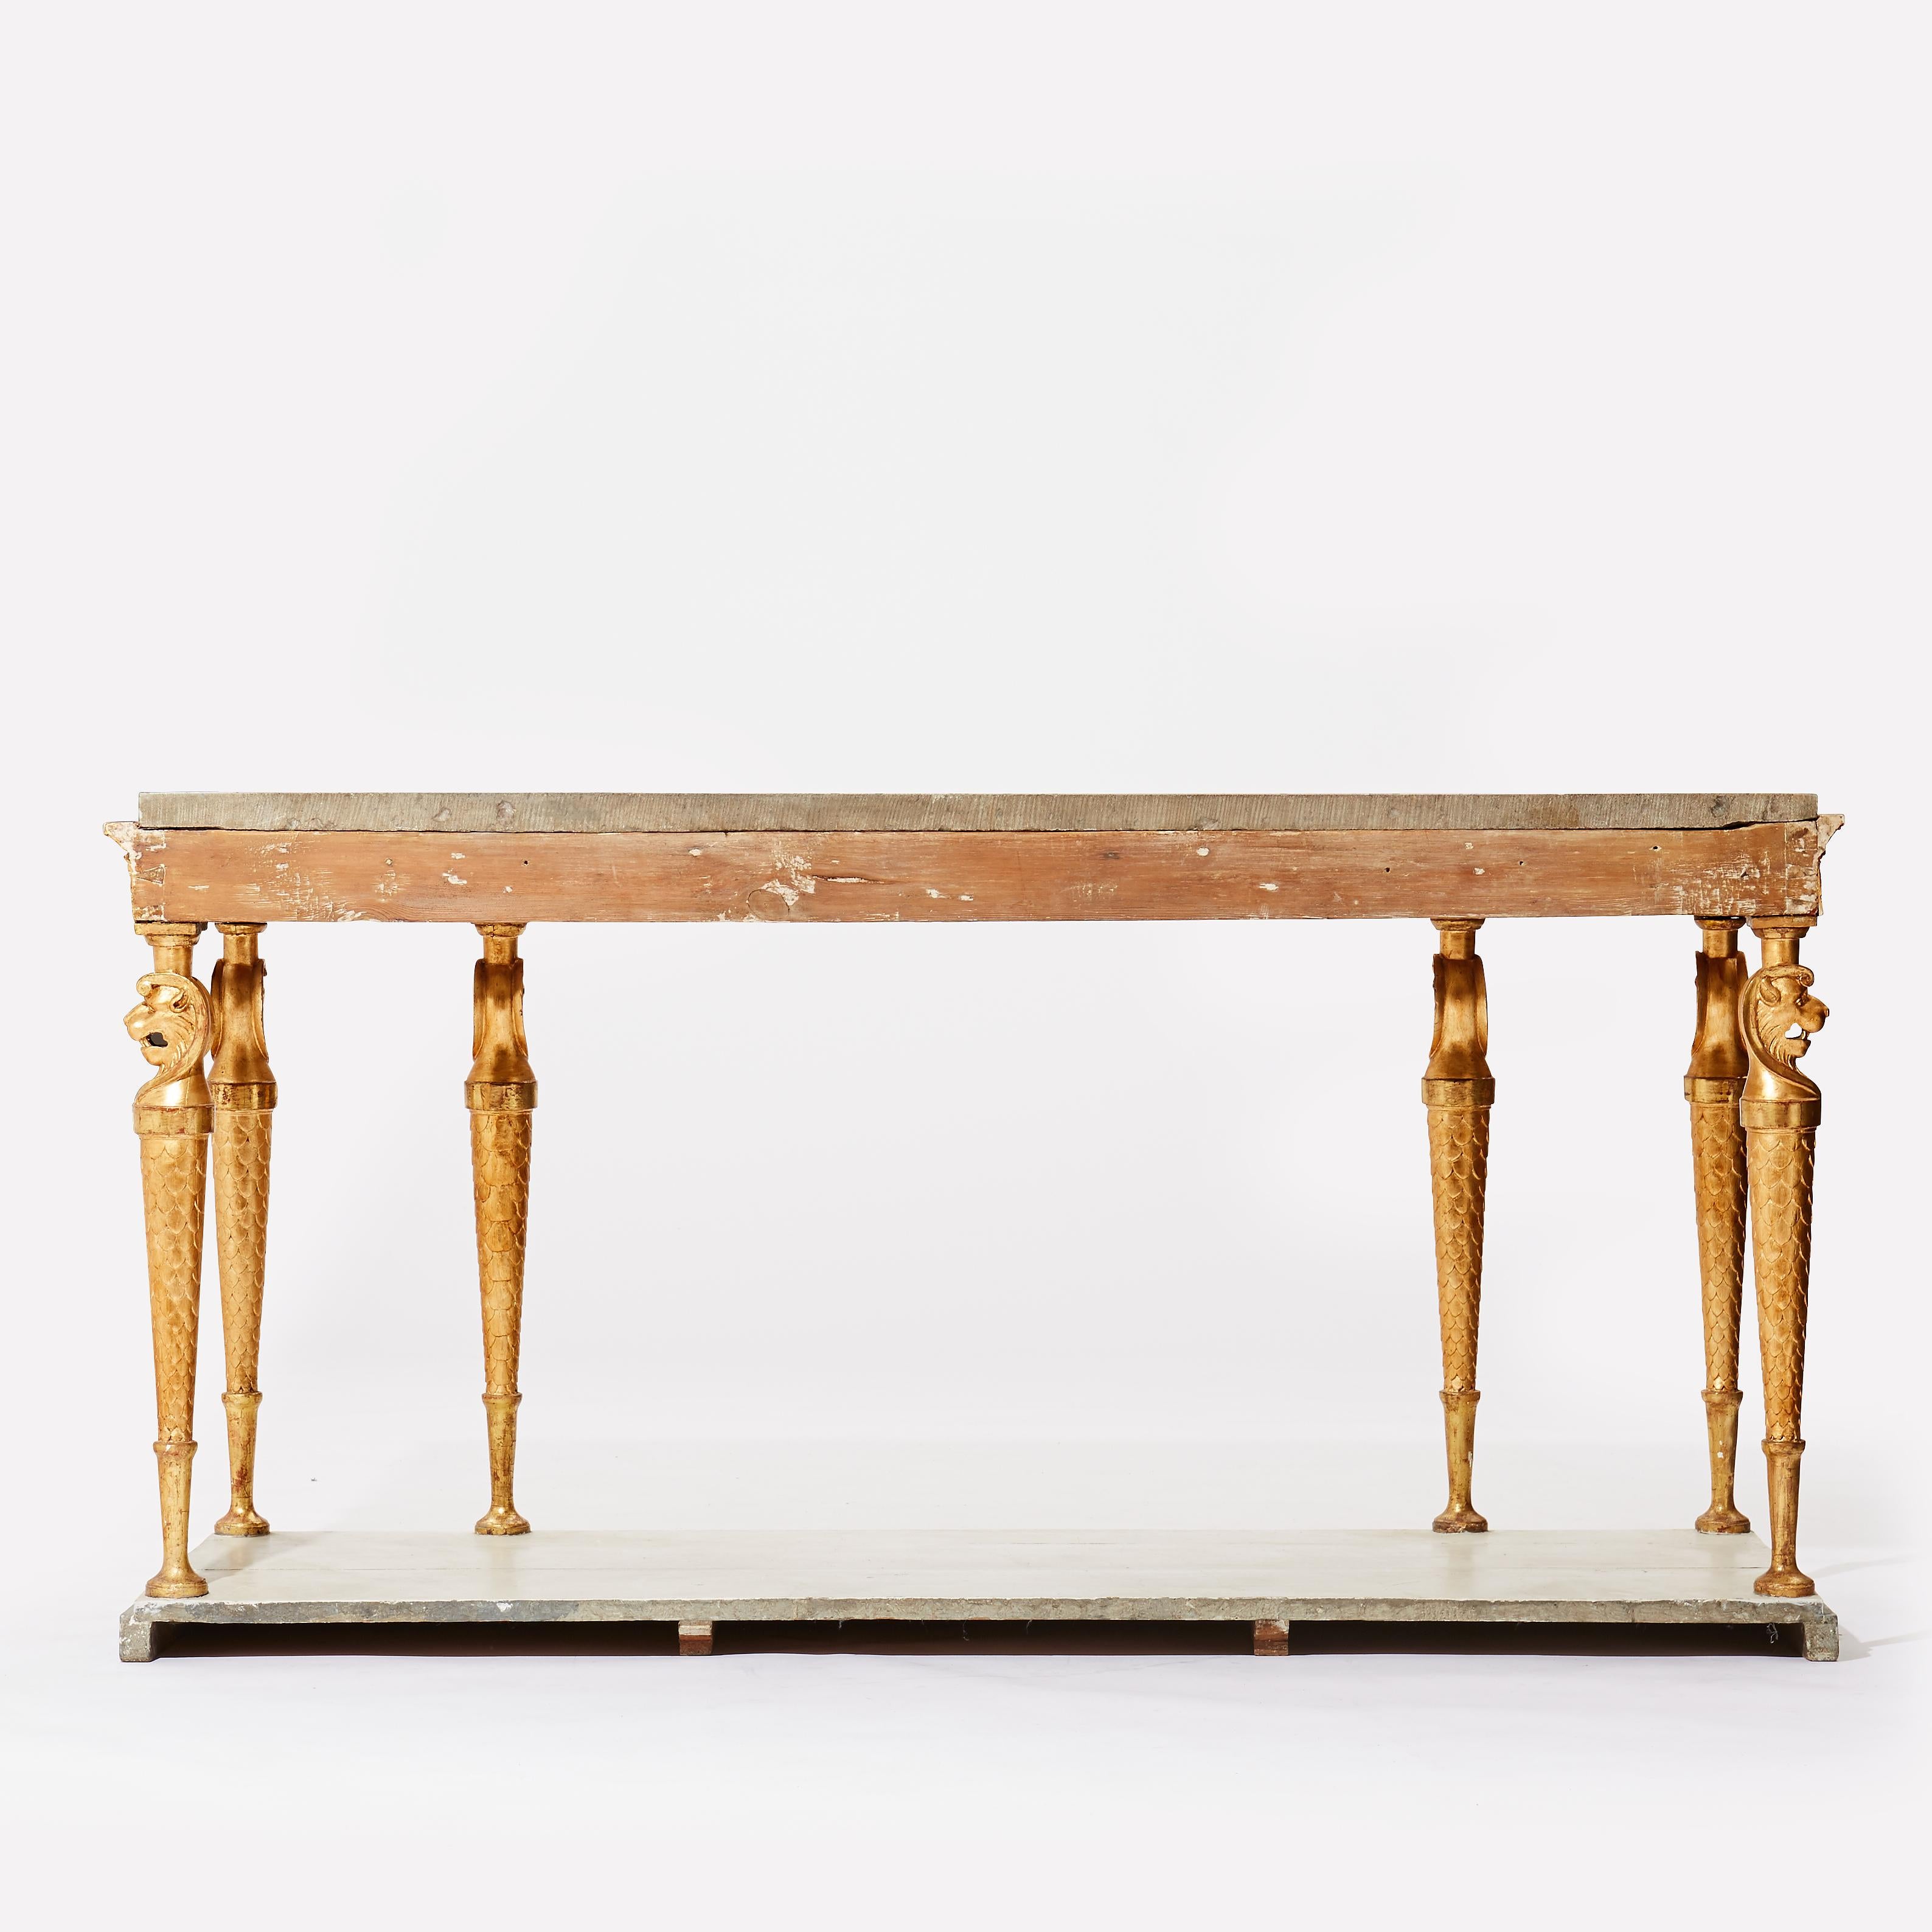 A Swedish Empire Gilt wood Console Table, Marble Top, Early 19th Century (Frühes 19. Jahrhundert)